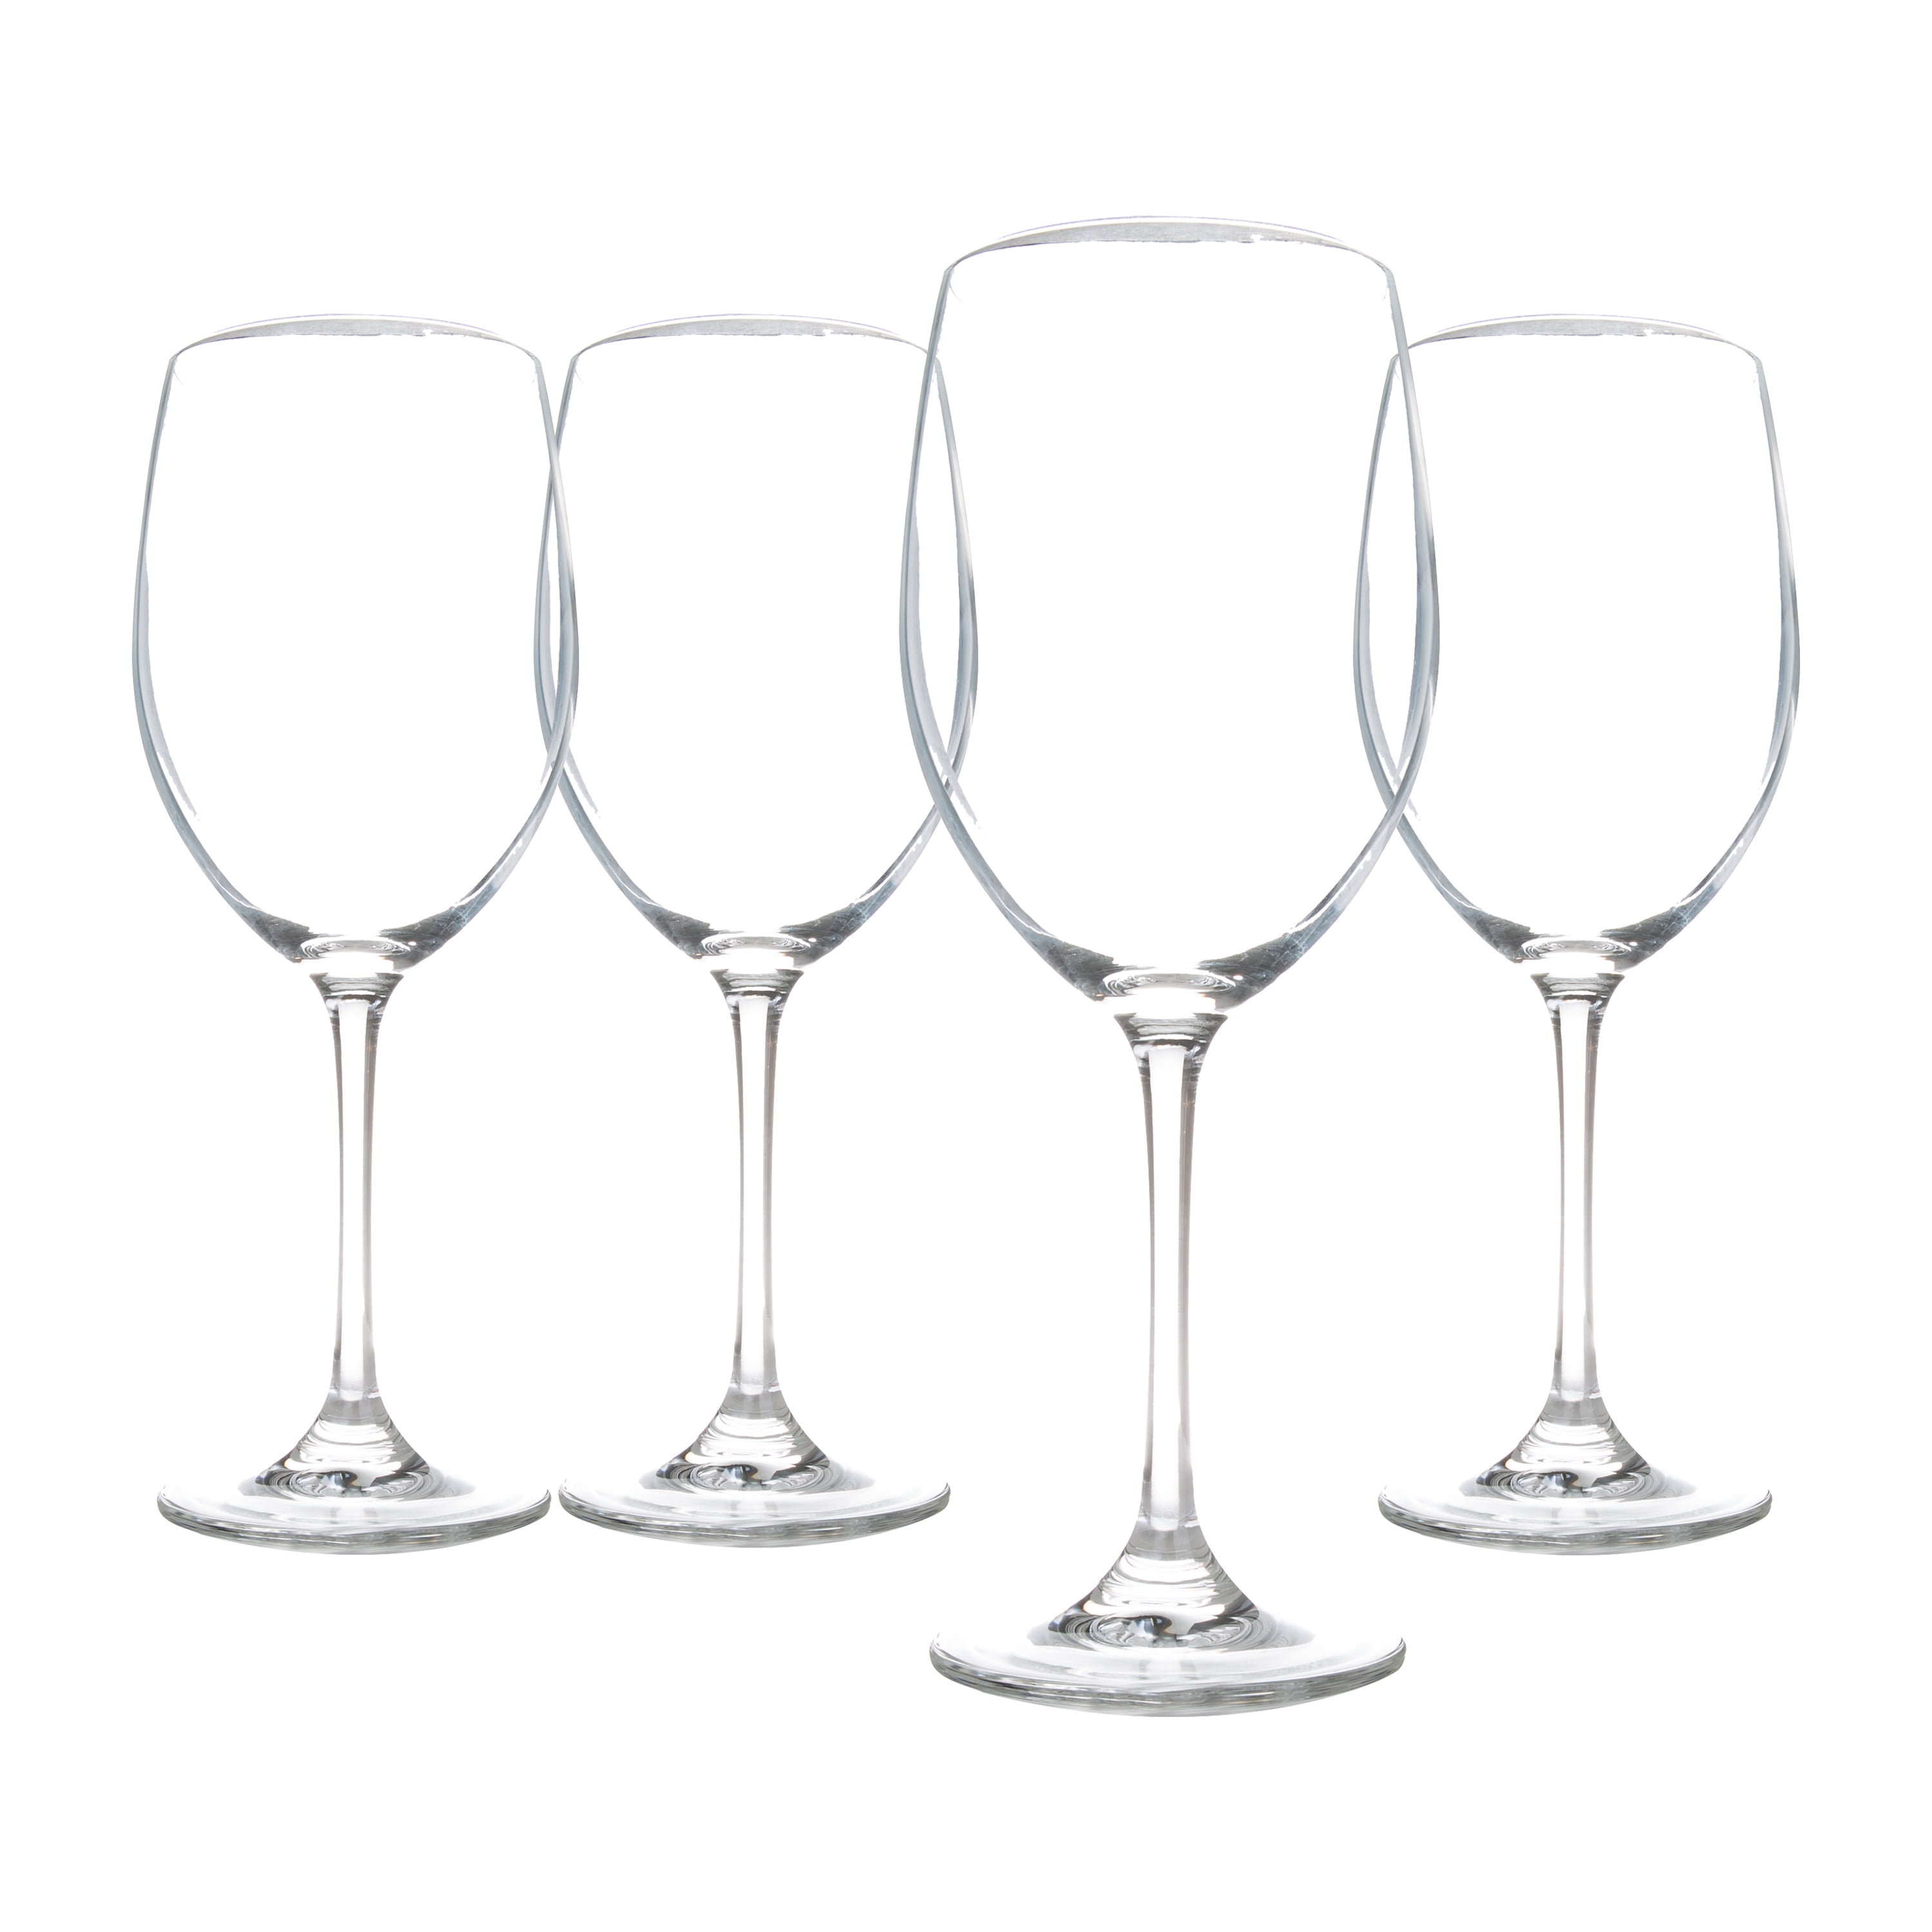 SUNNOW Vastto 10 Ounce Classic Crystal Wine Glass,for